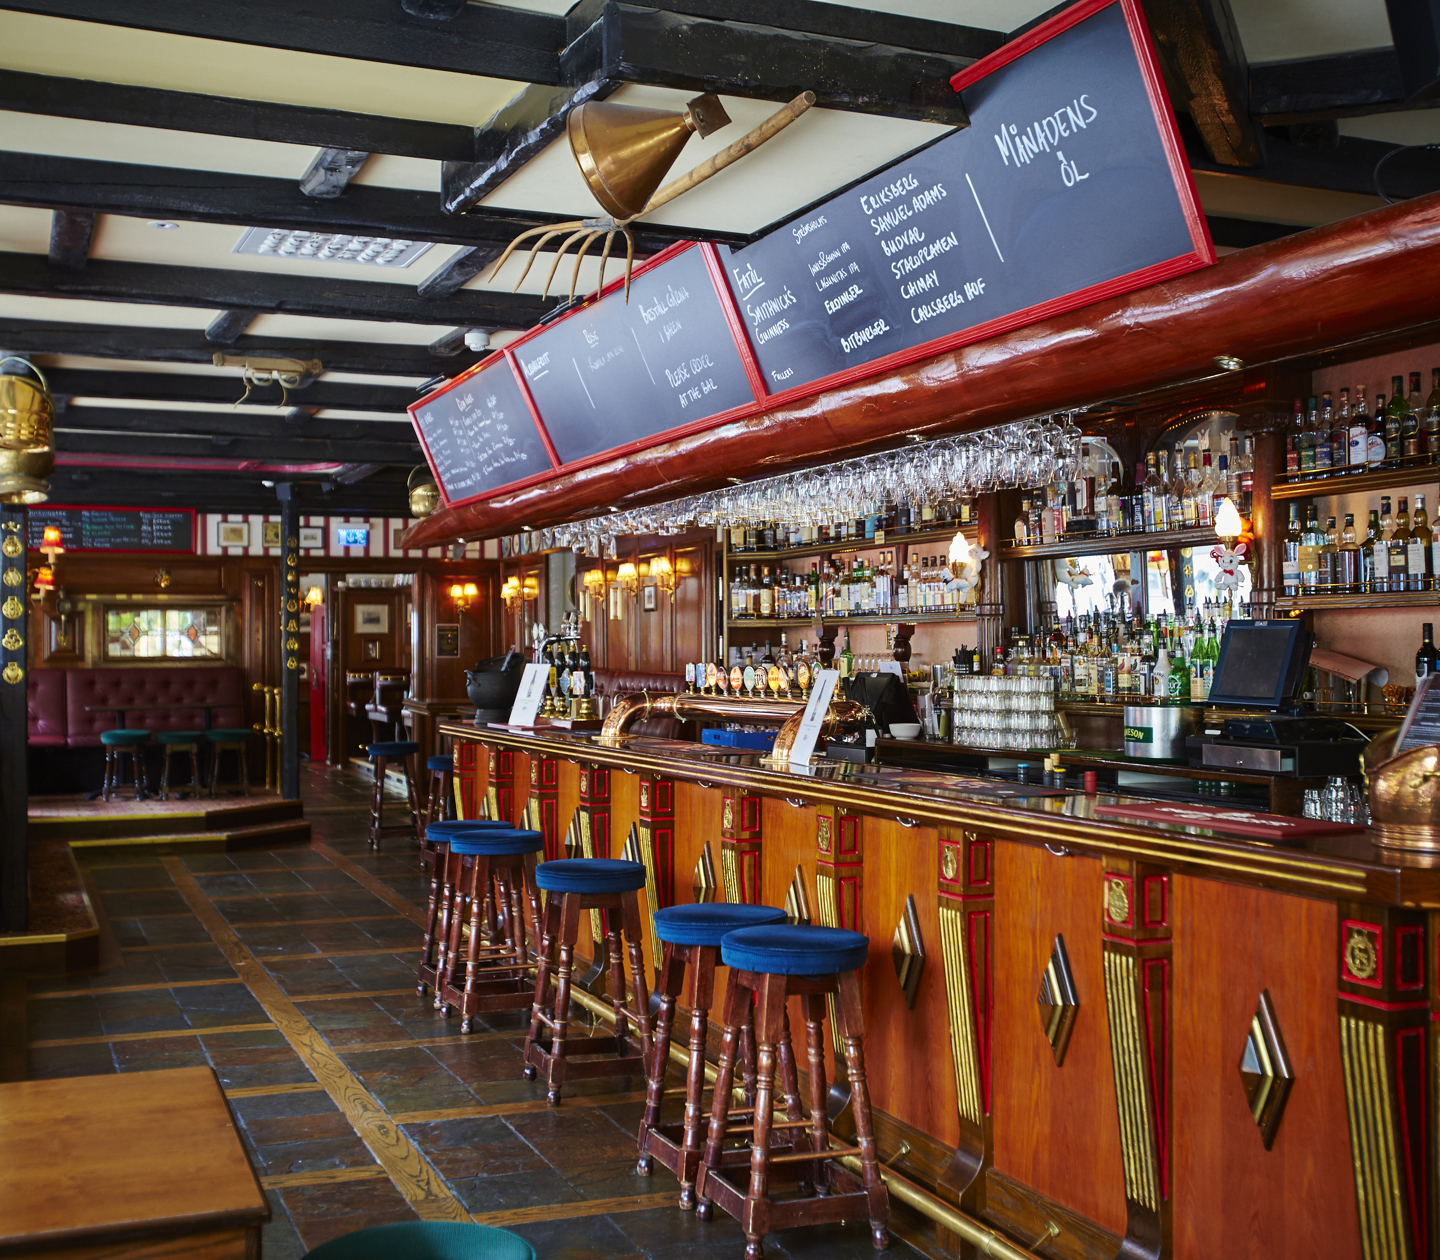 Classic English pub with bar, bar stools and menus